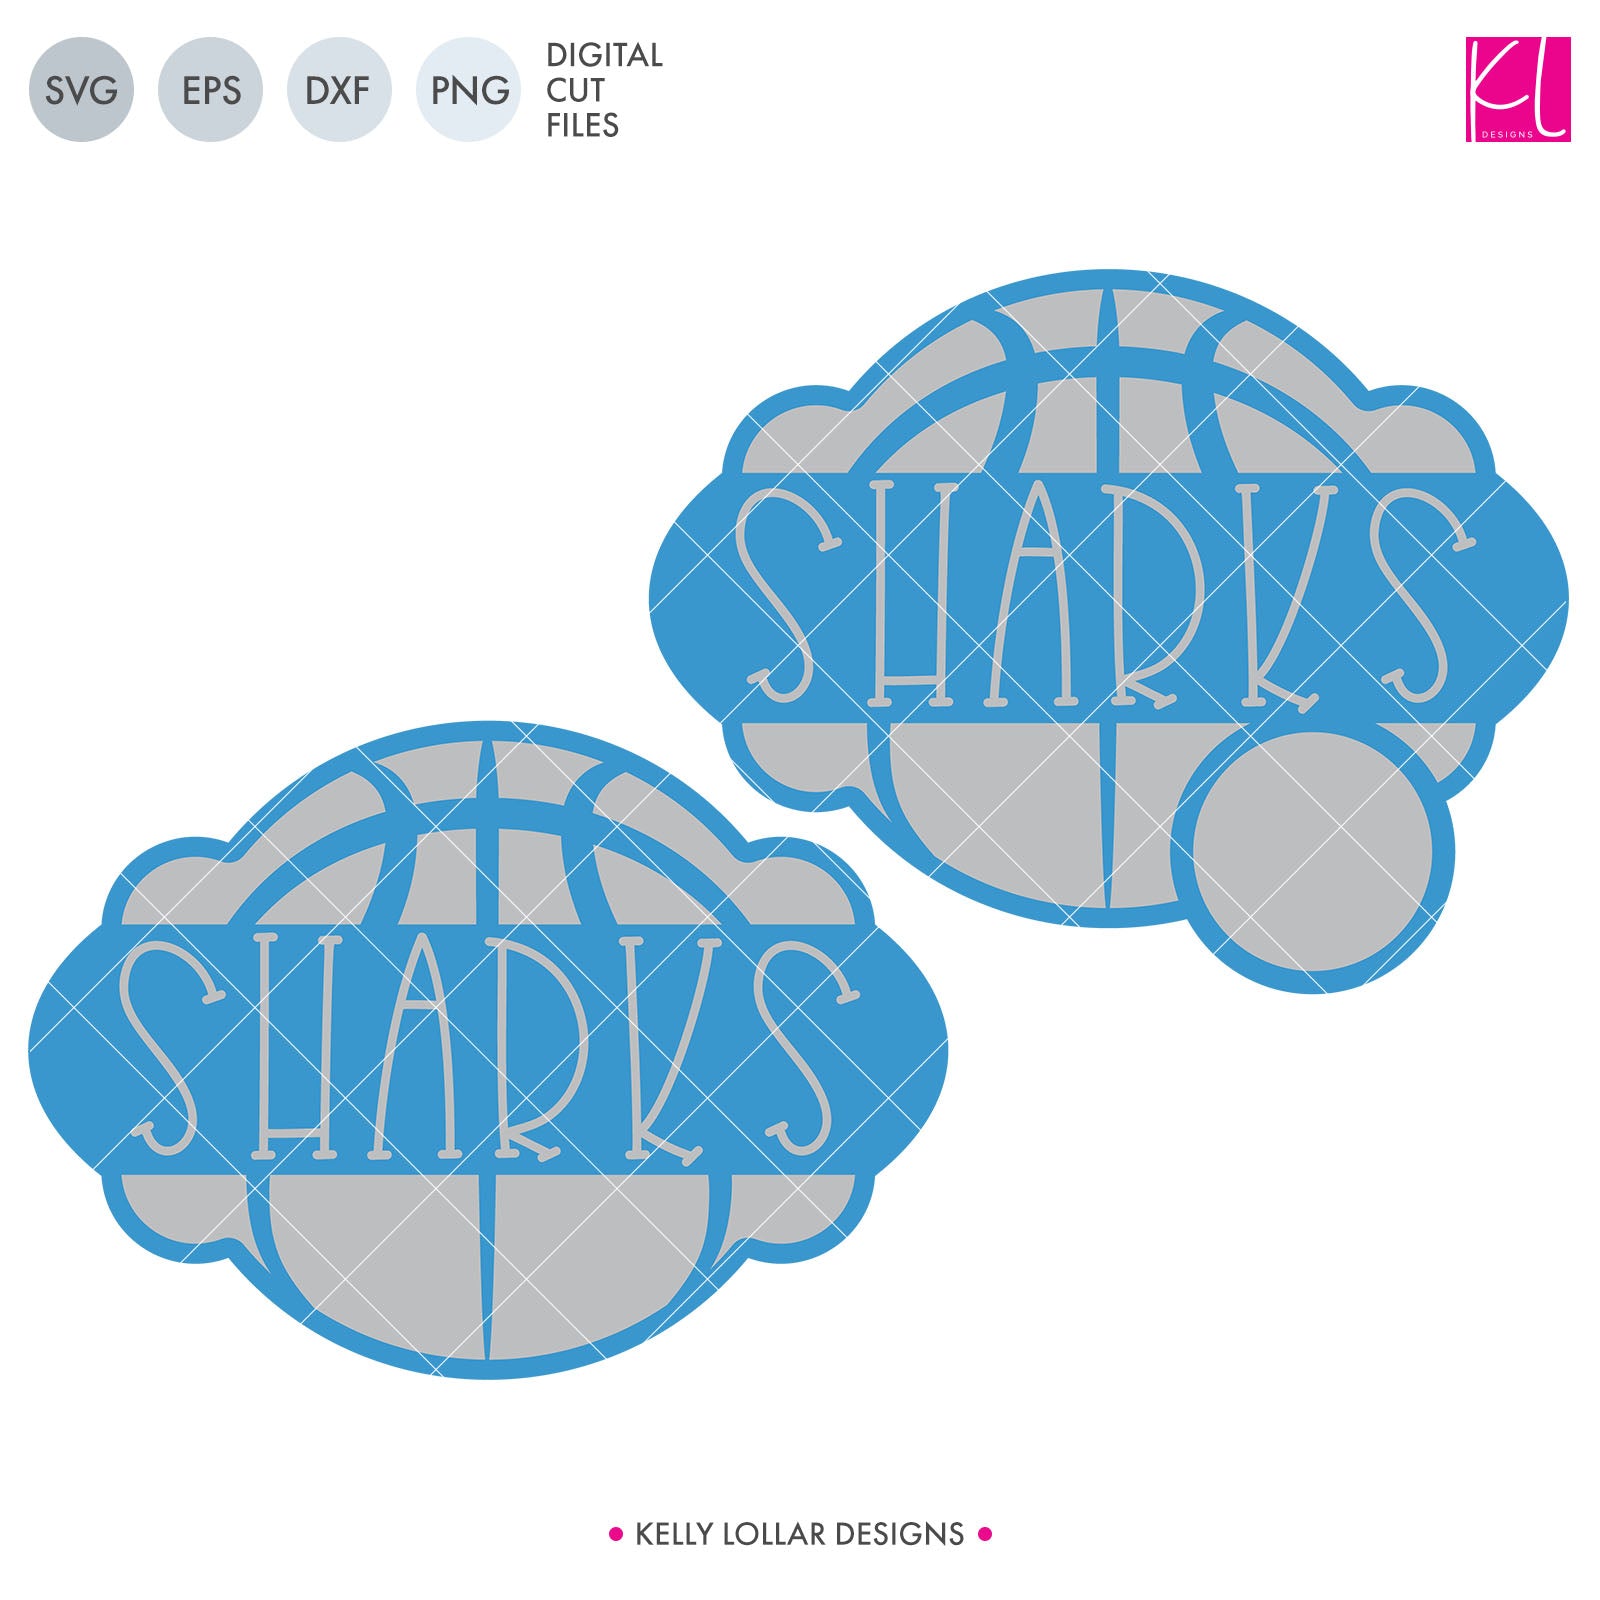 Jackets Basketball Bundle  SVG DXF EPS PNG Cut Files - Kelly Lollar Designs